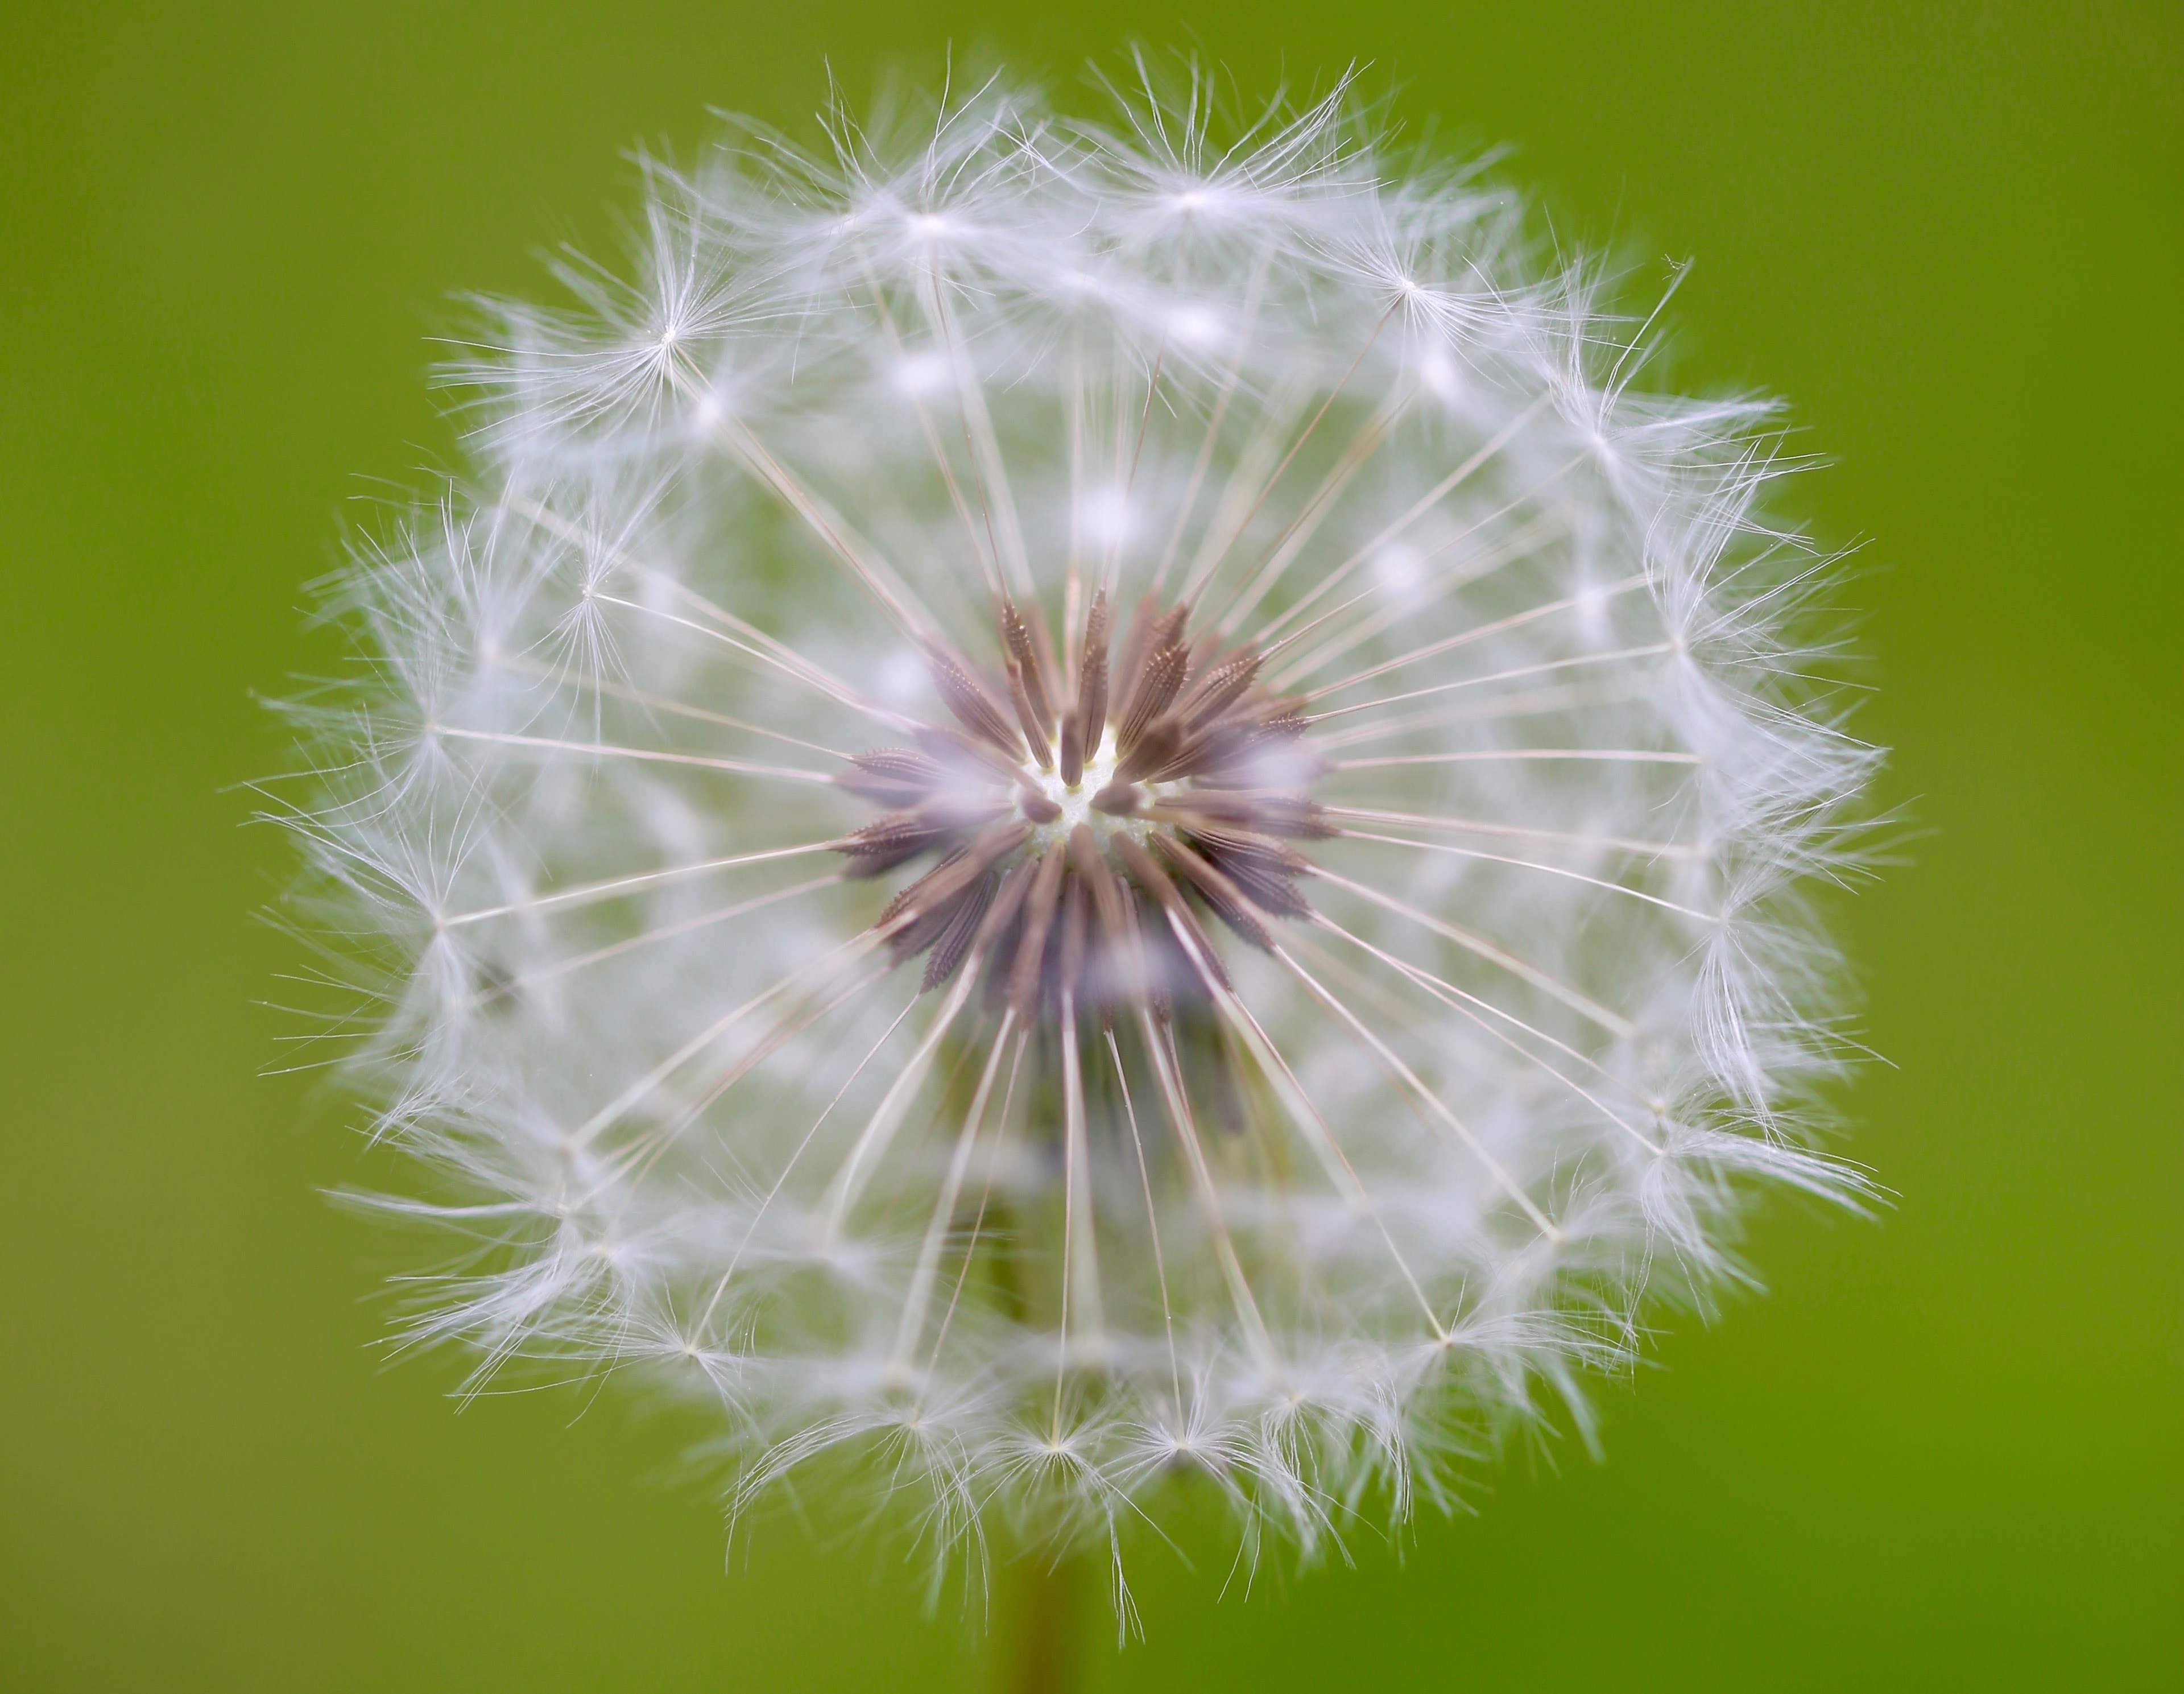 white dandelion